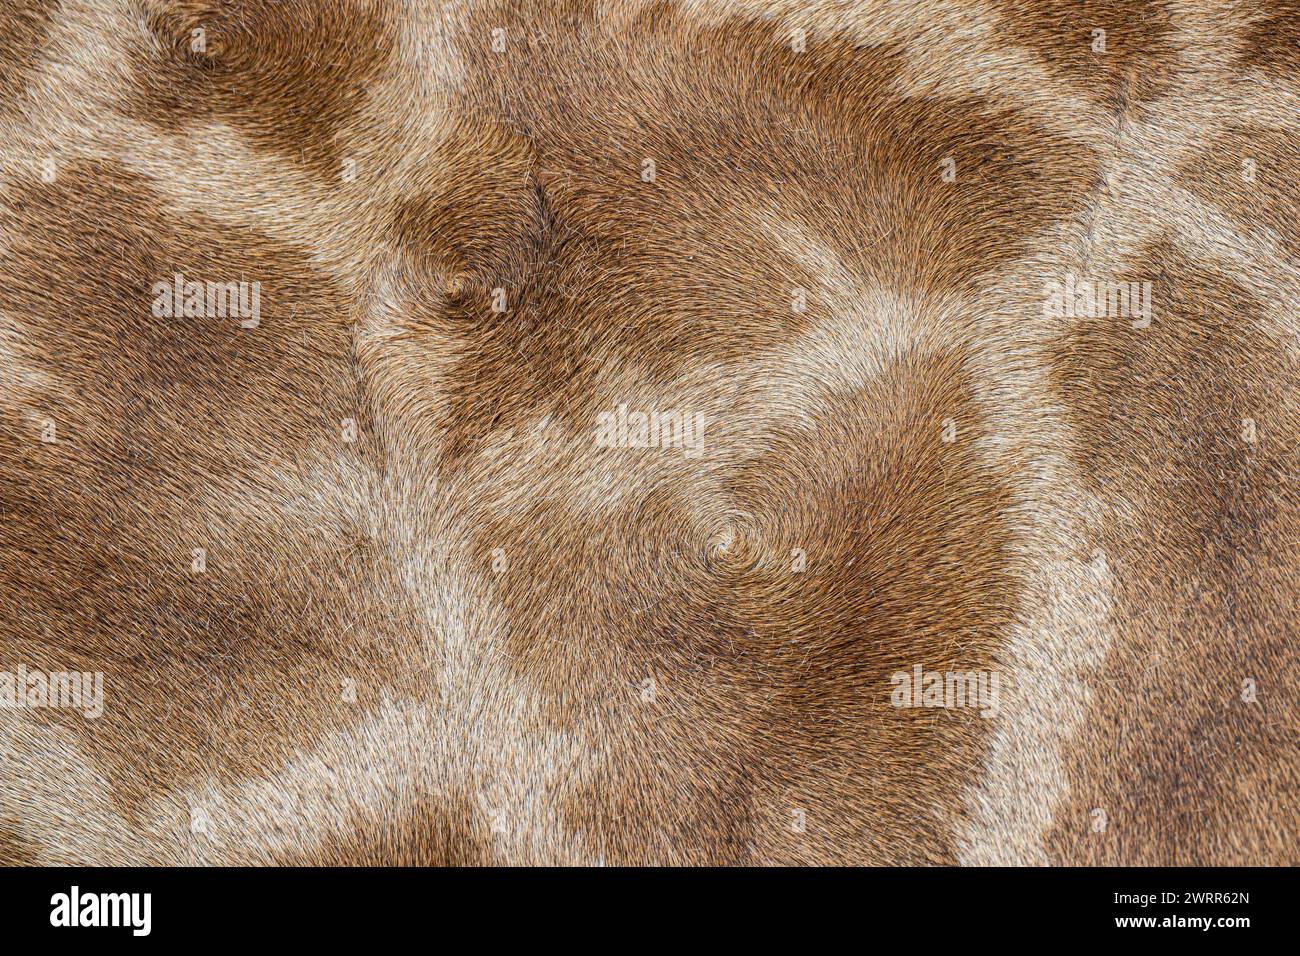 Closeup giraffe life skin background Stock Photo